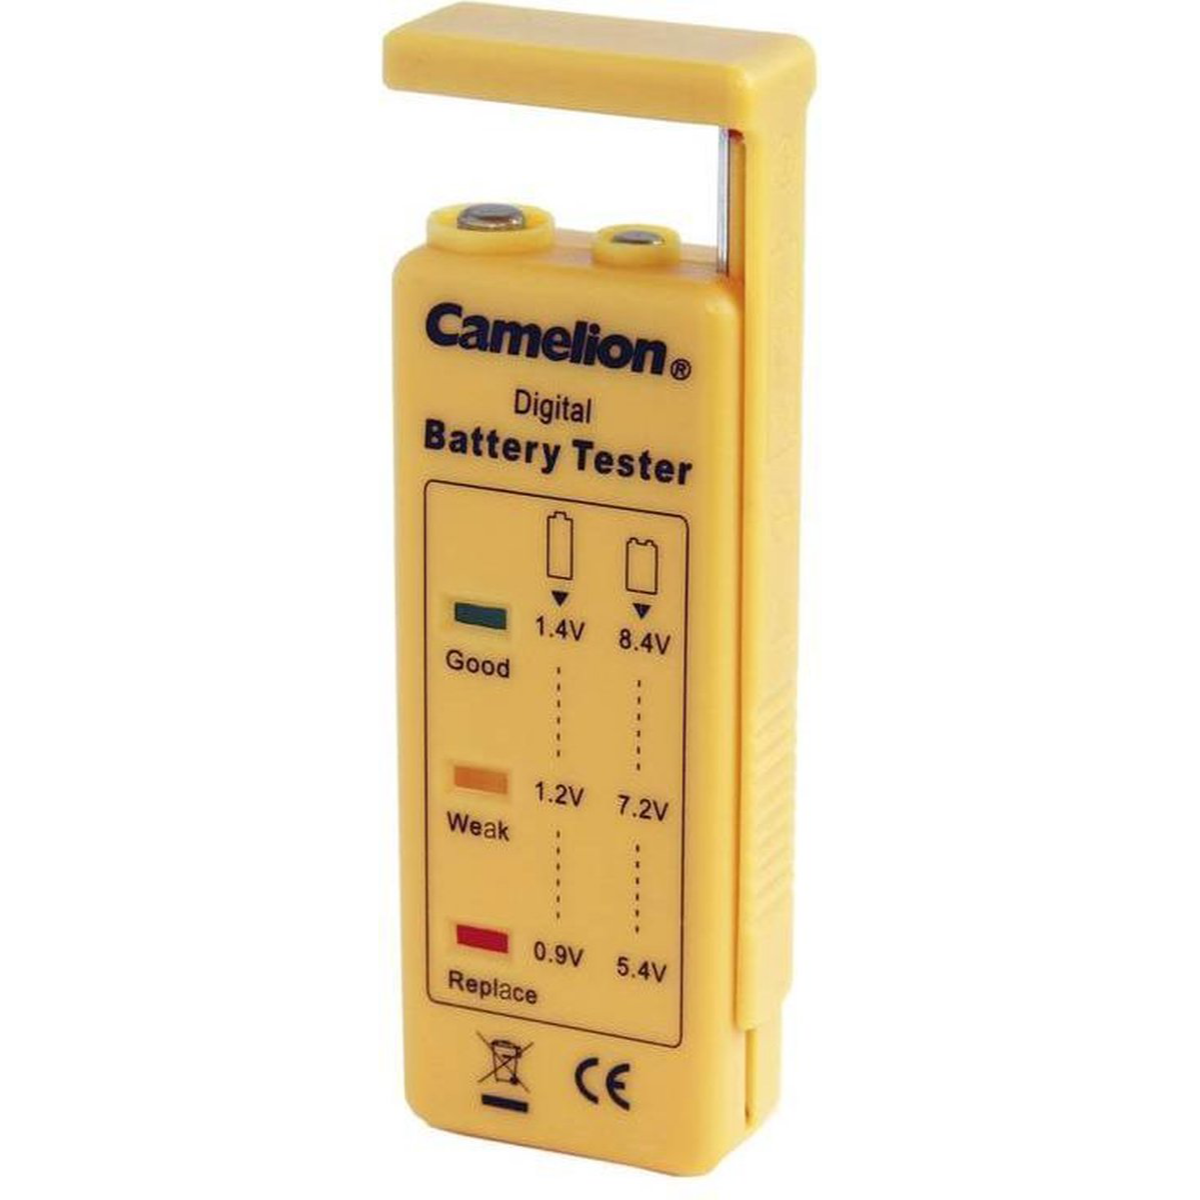 Blok batterij tester - Camelion